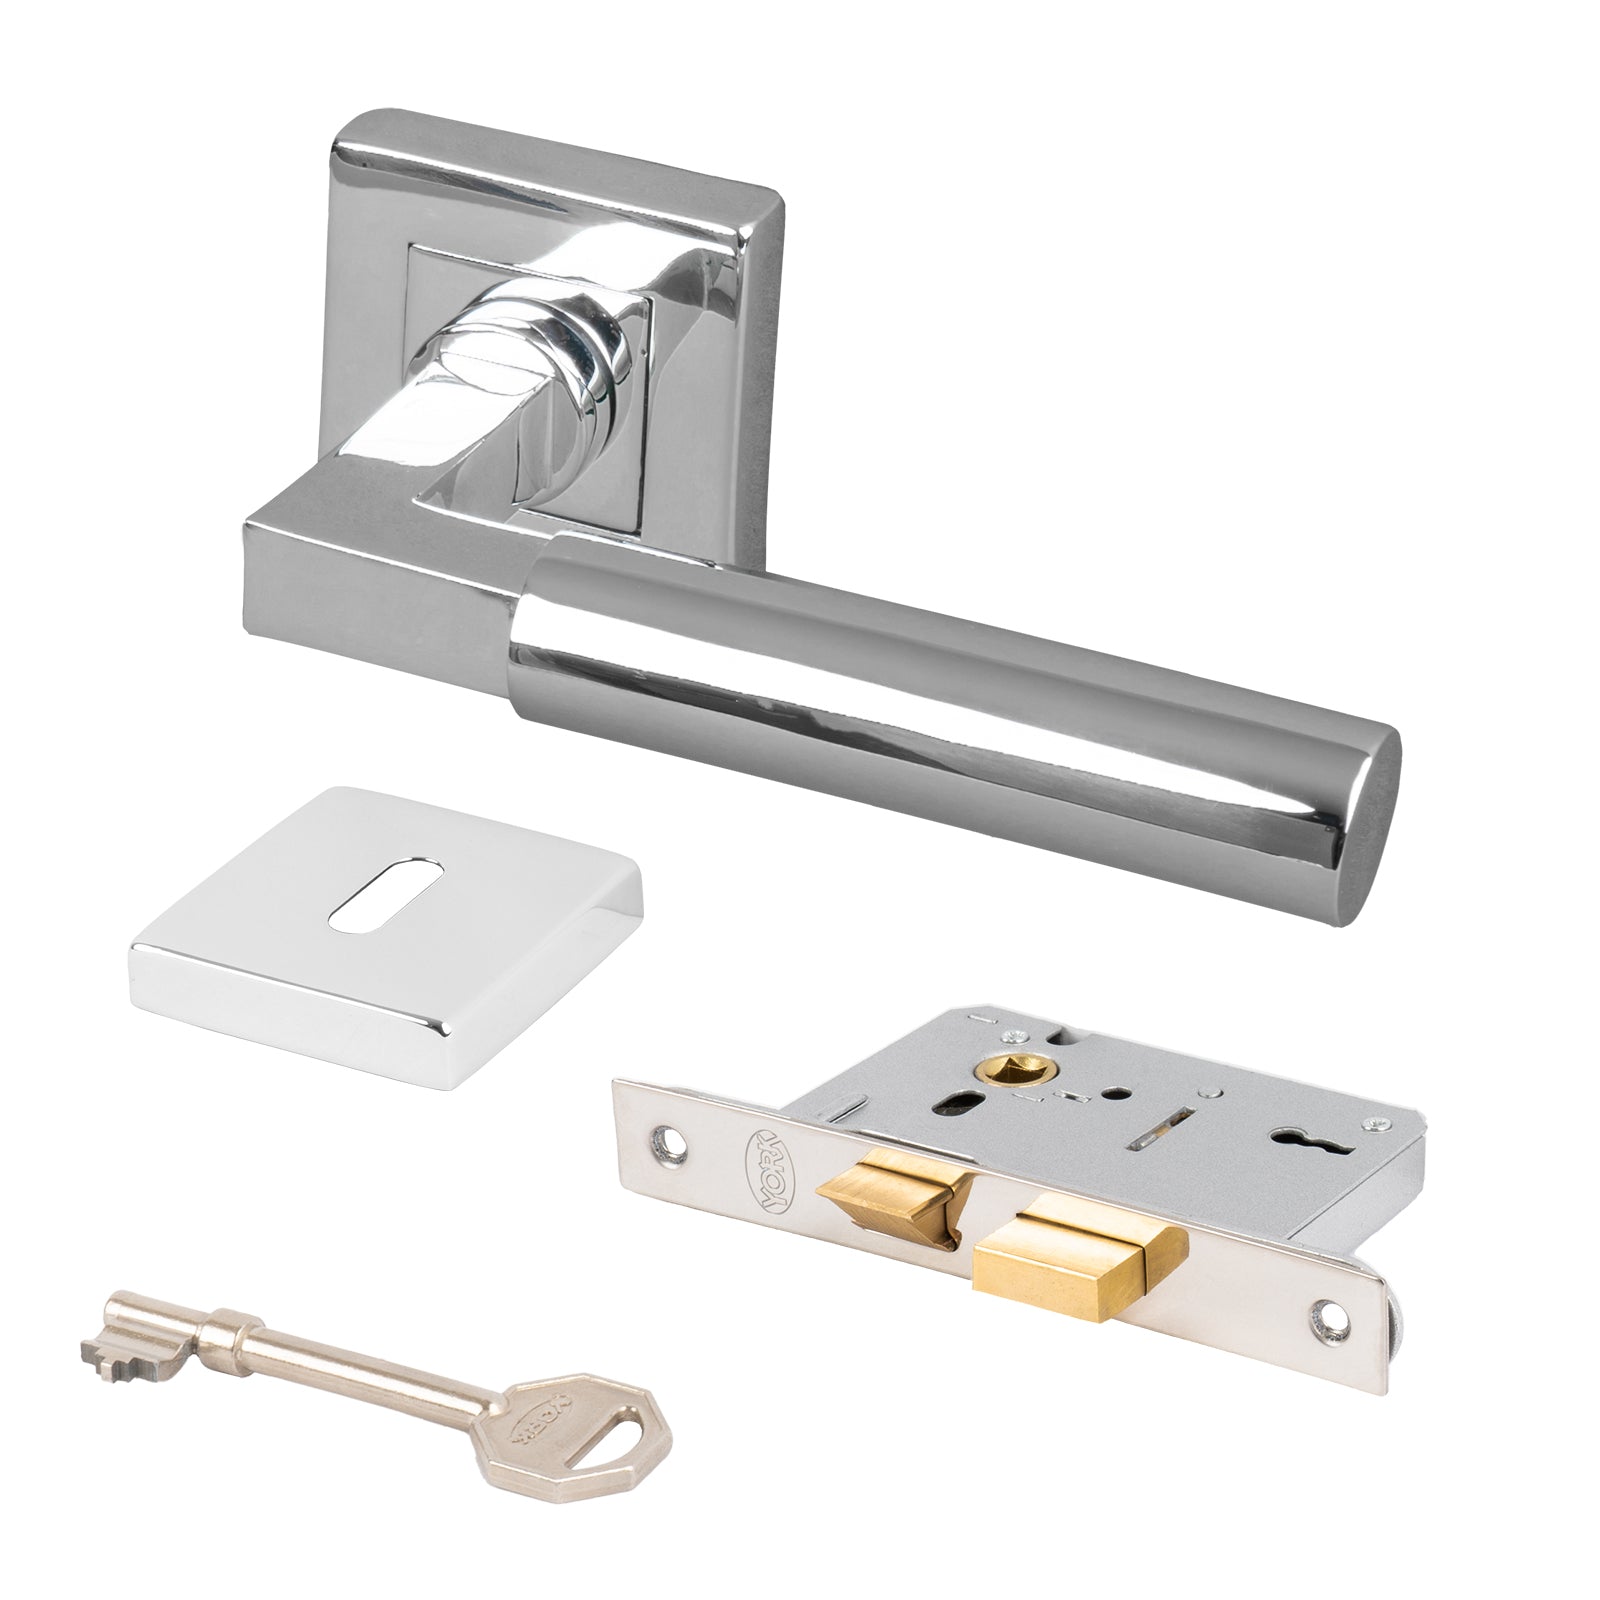 chrome Bauhaus door handles 3 lever sash lock set